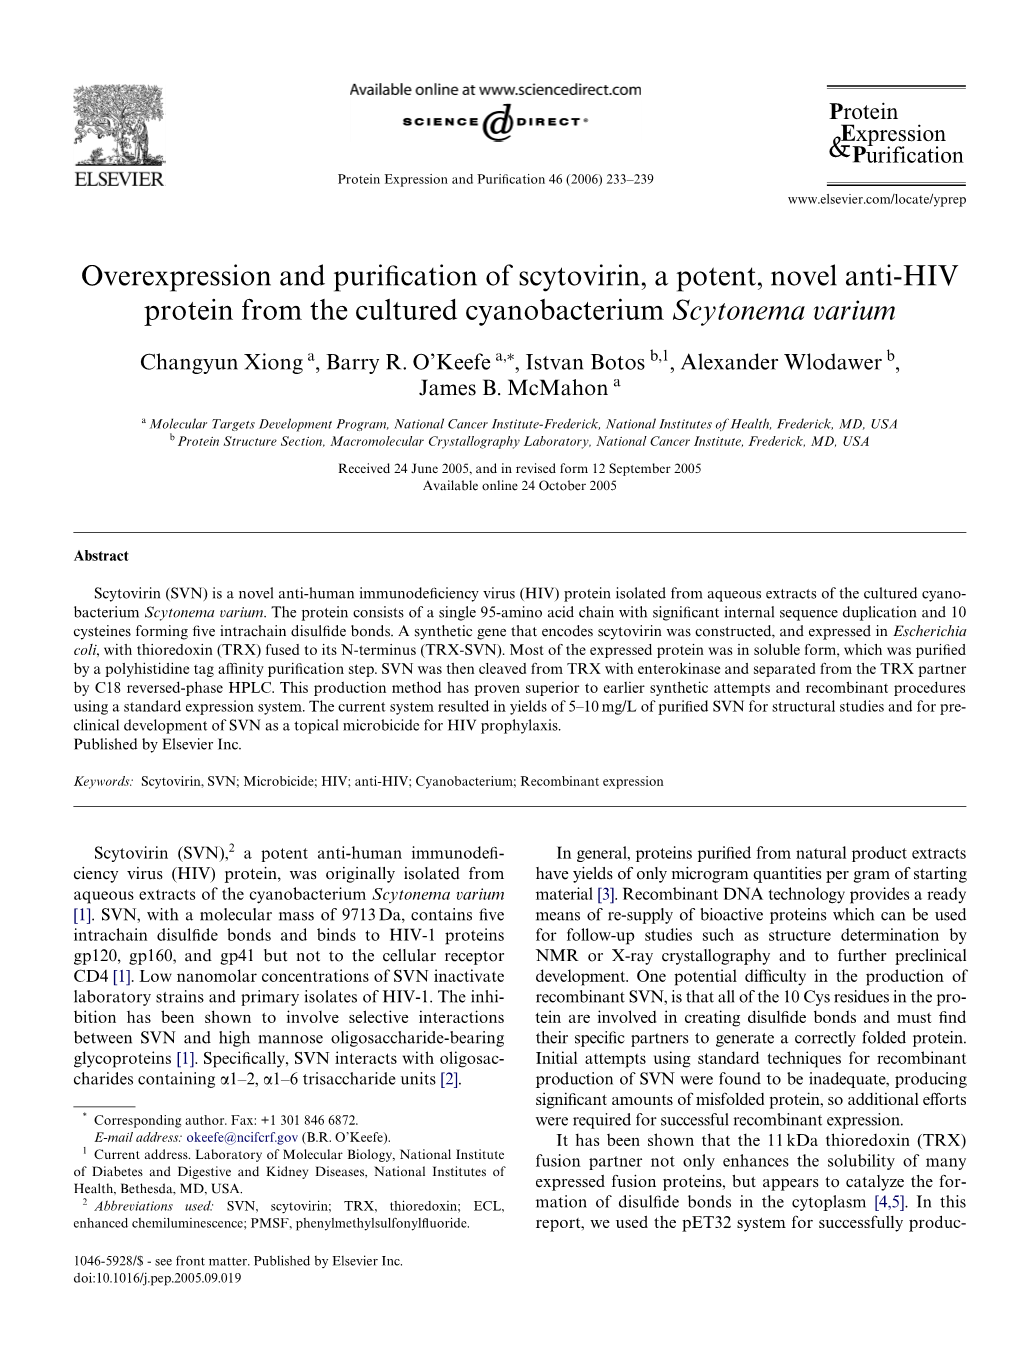 Overexpression and Purification of Scytovirin, a Potent, Novel Anti-HIV